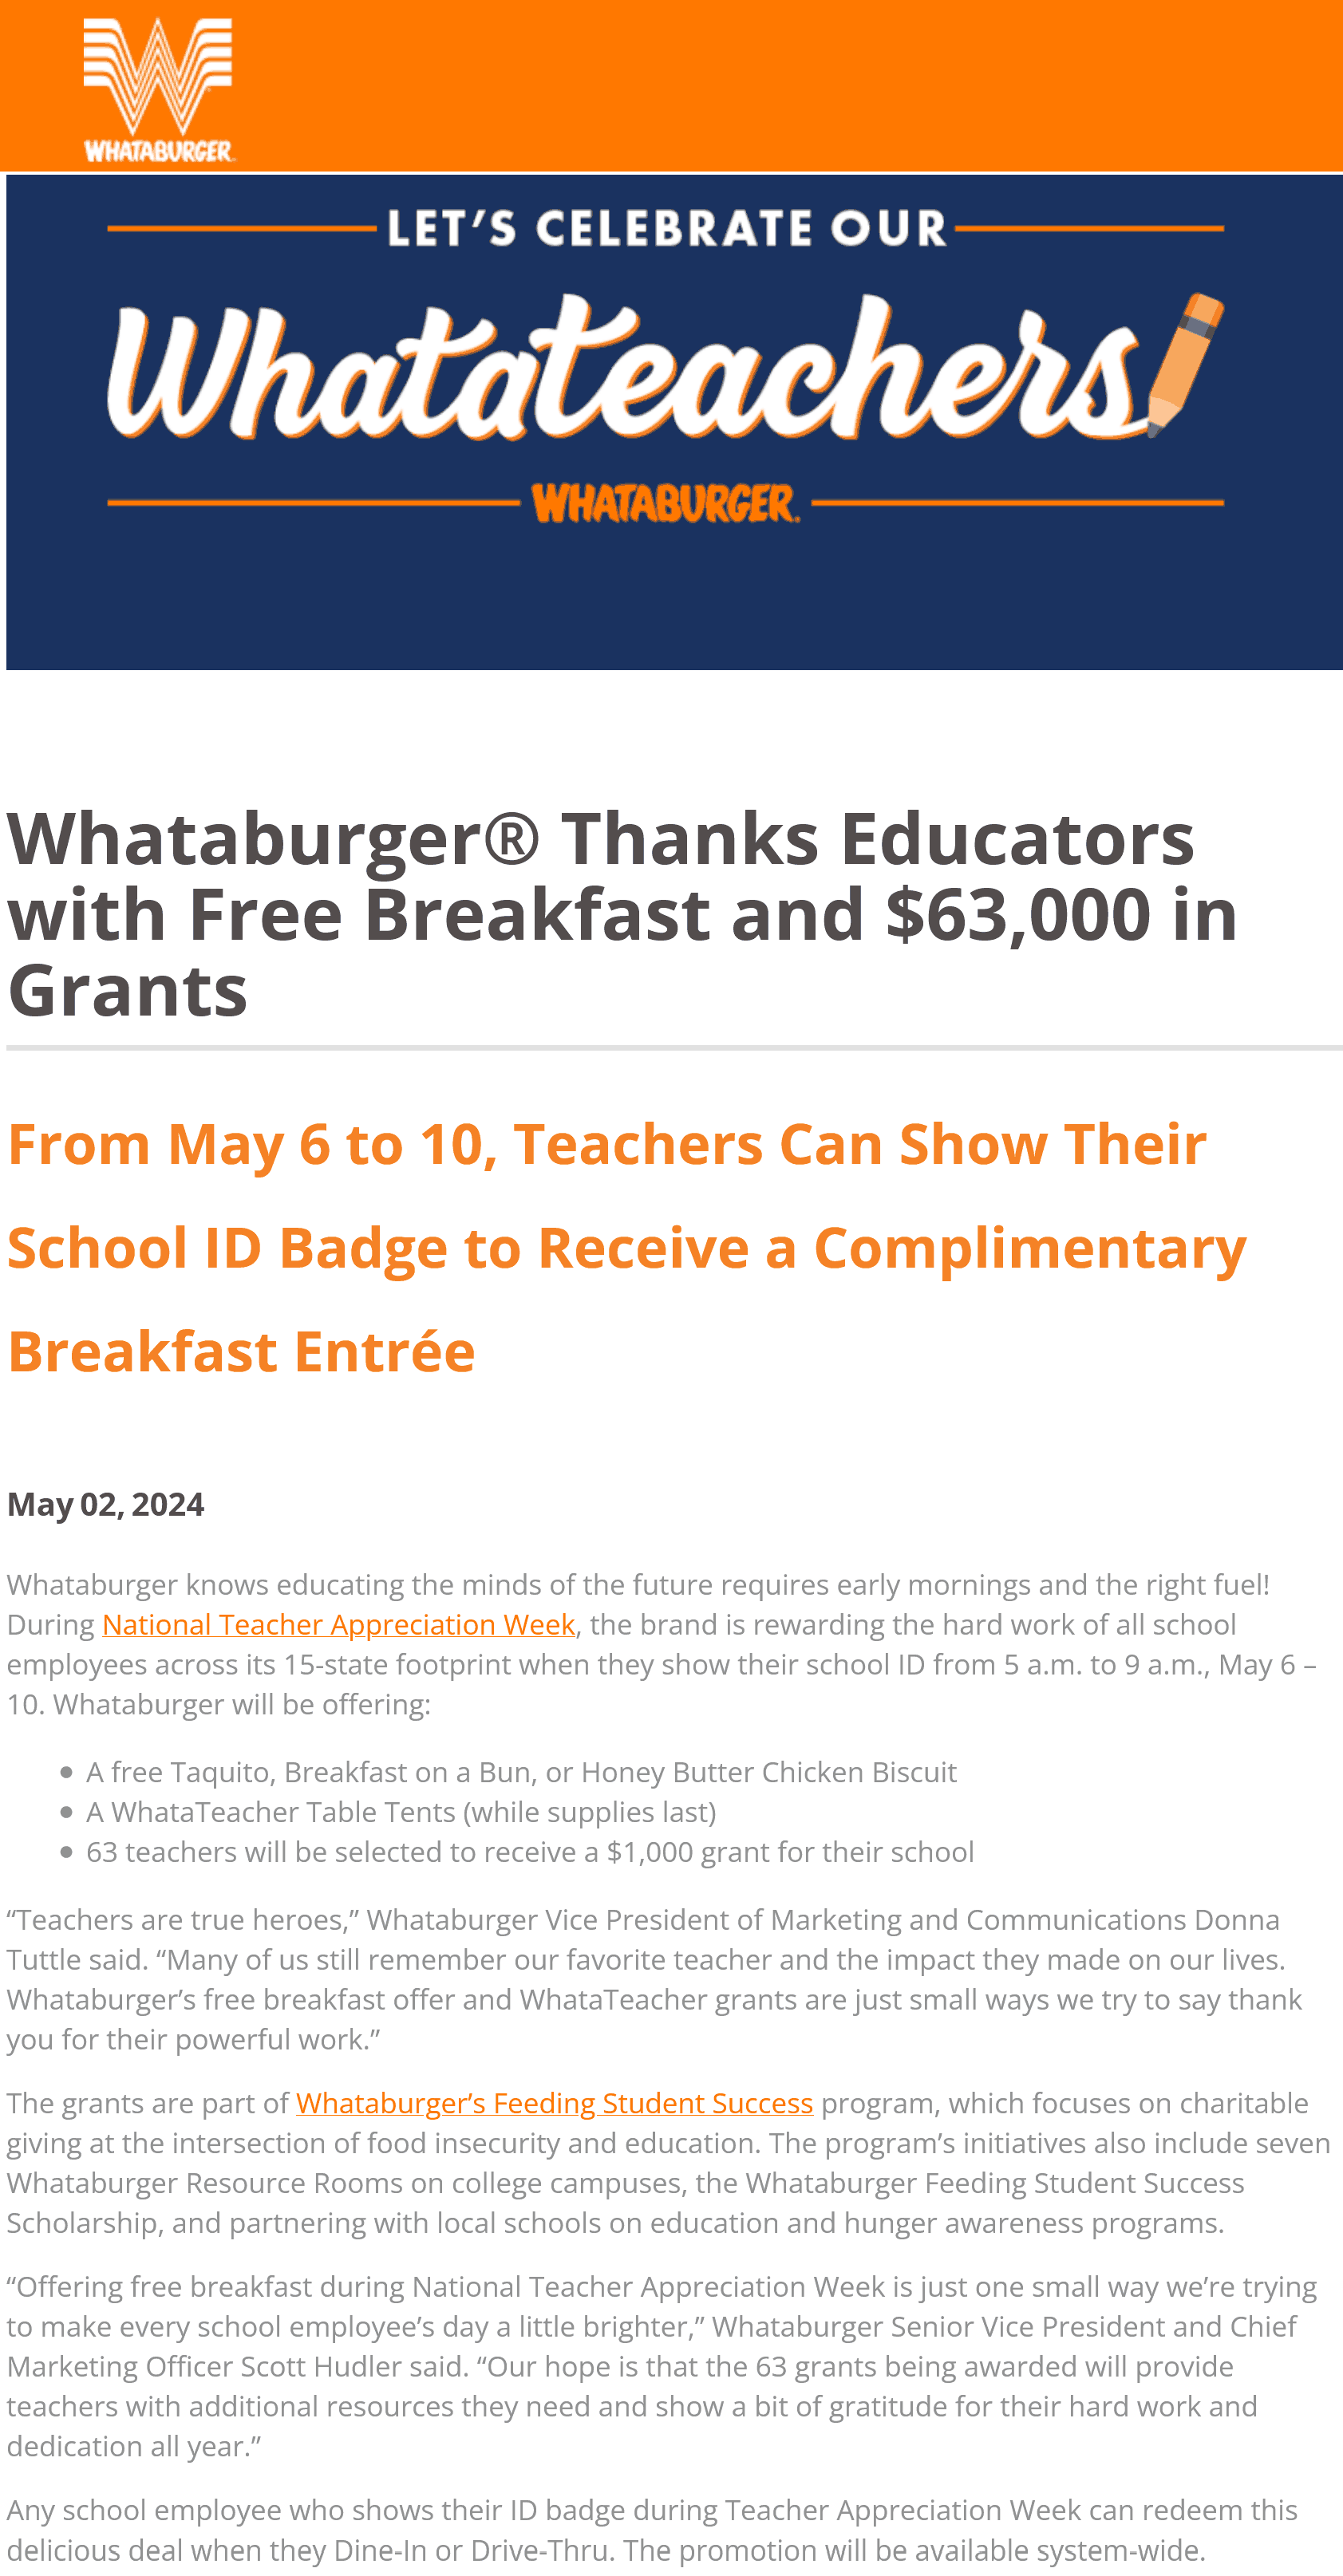 Whataburger restaurants Coupon  Free breakfast entree items for teachers at Whataburger #whataburger 